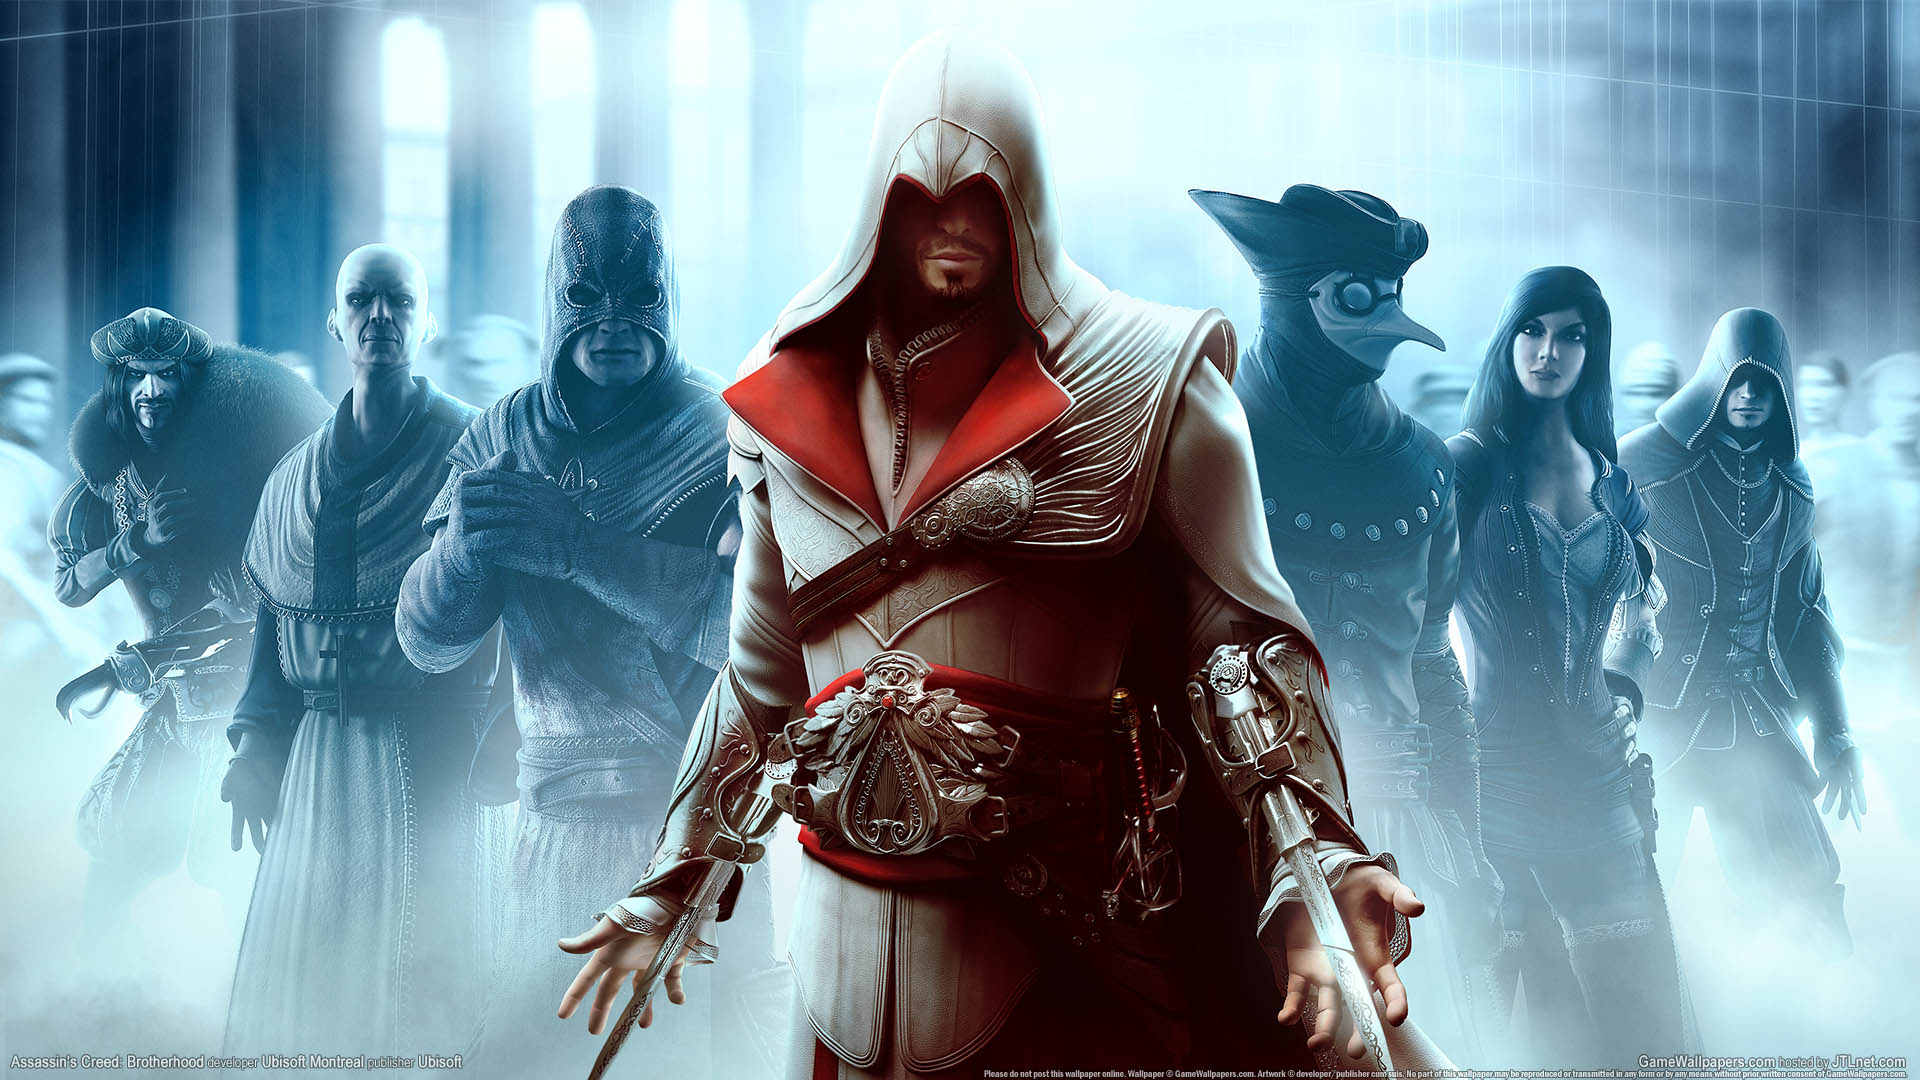 Assassin's Creed: Brotherhood wallpaper 01 1920x1080